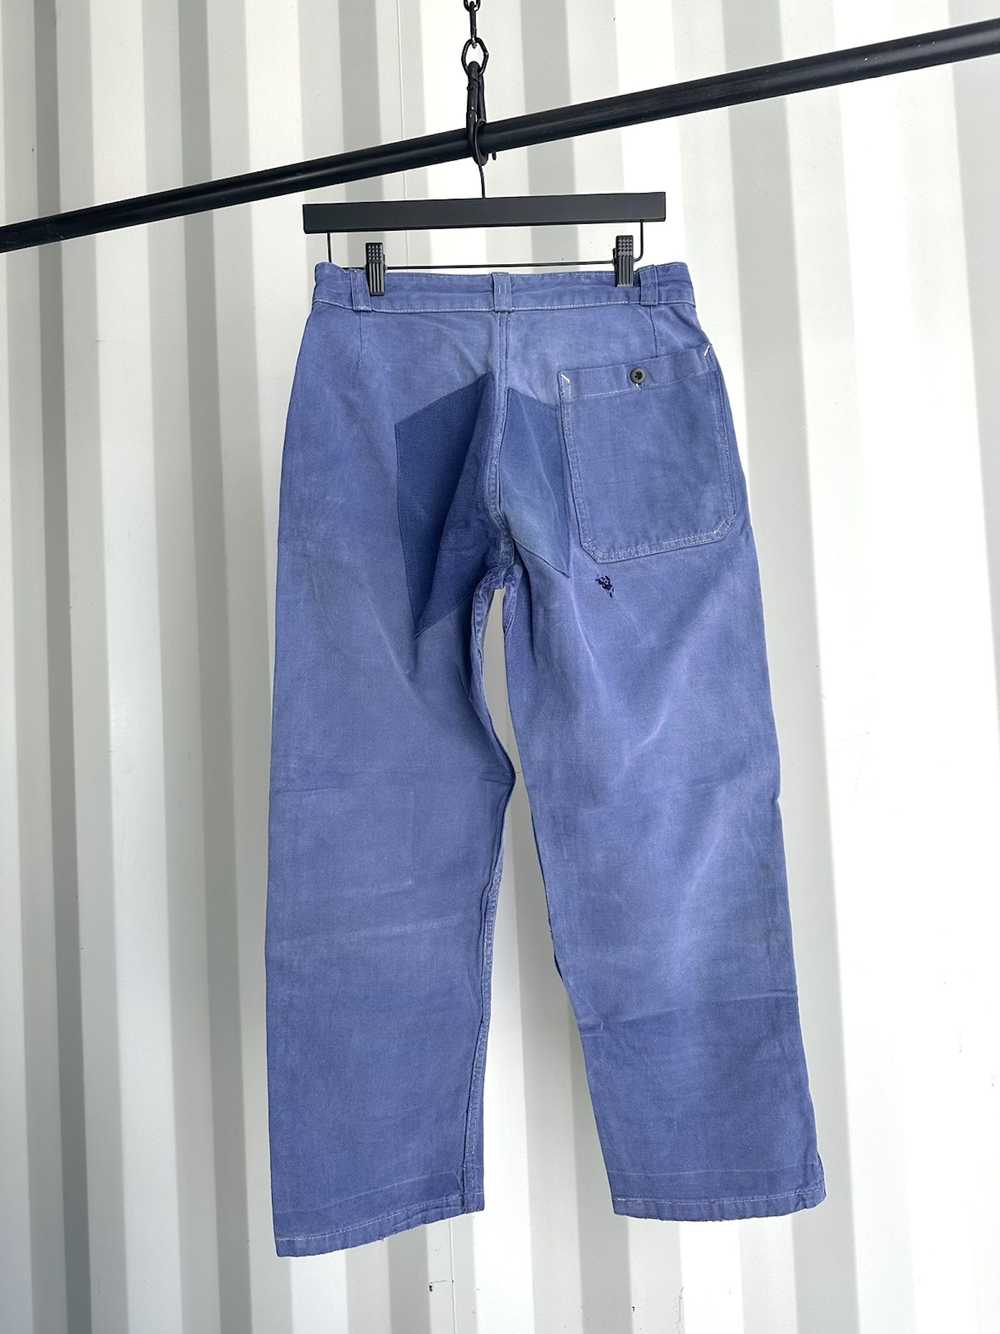 Vintage French Moleskin Chore Pants Workwear Dist… - image 3